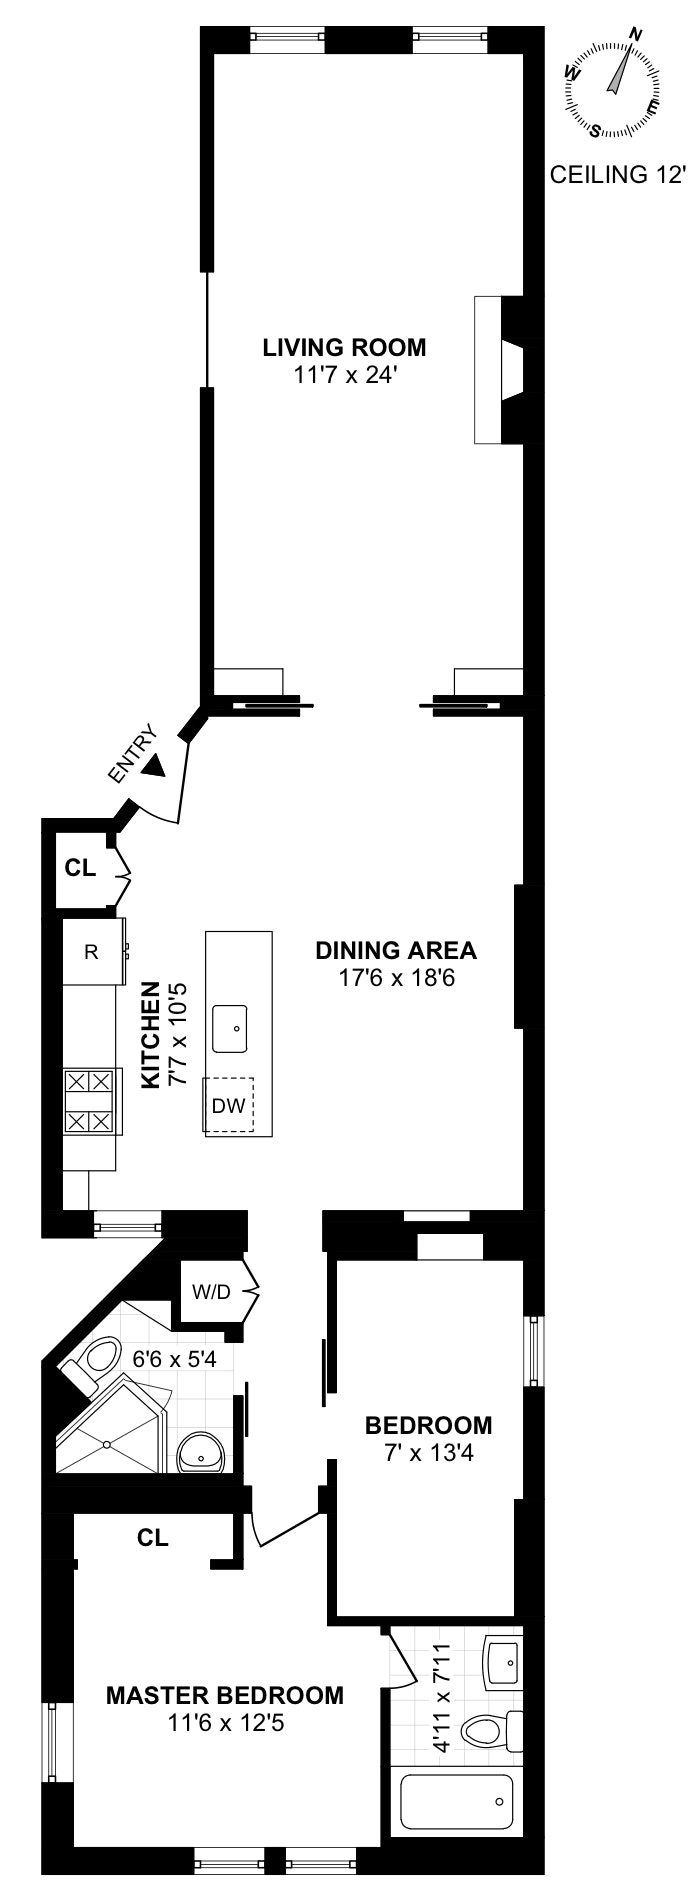 Floorplan for 255 Sixth Avenue, 2